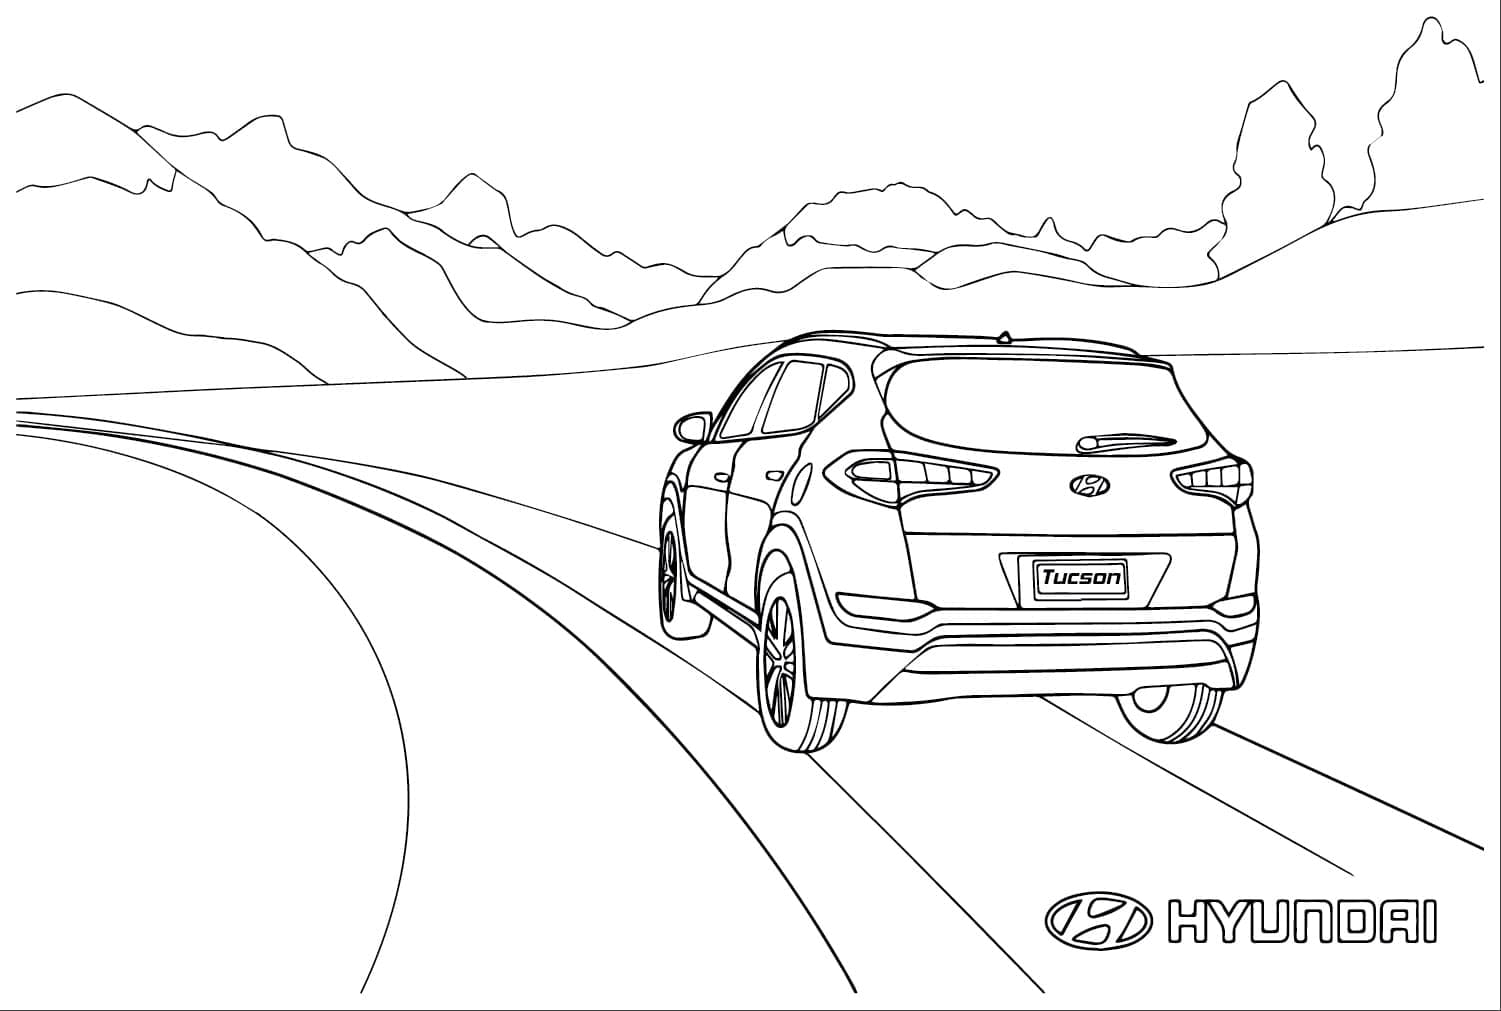 Hyundai-auto op de weg